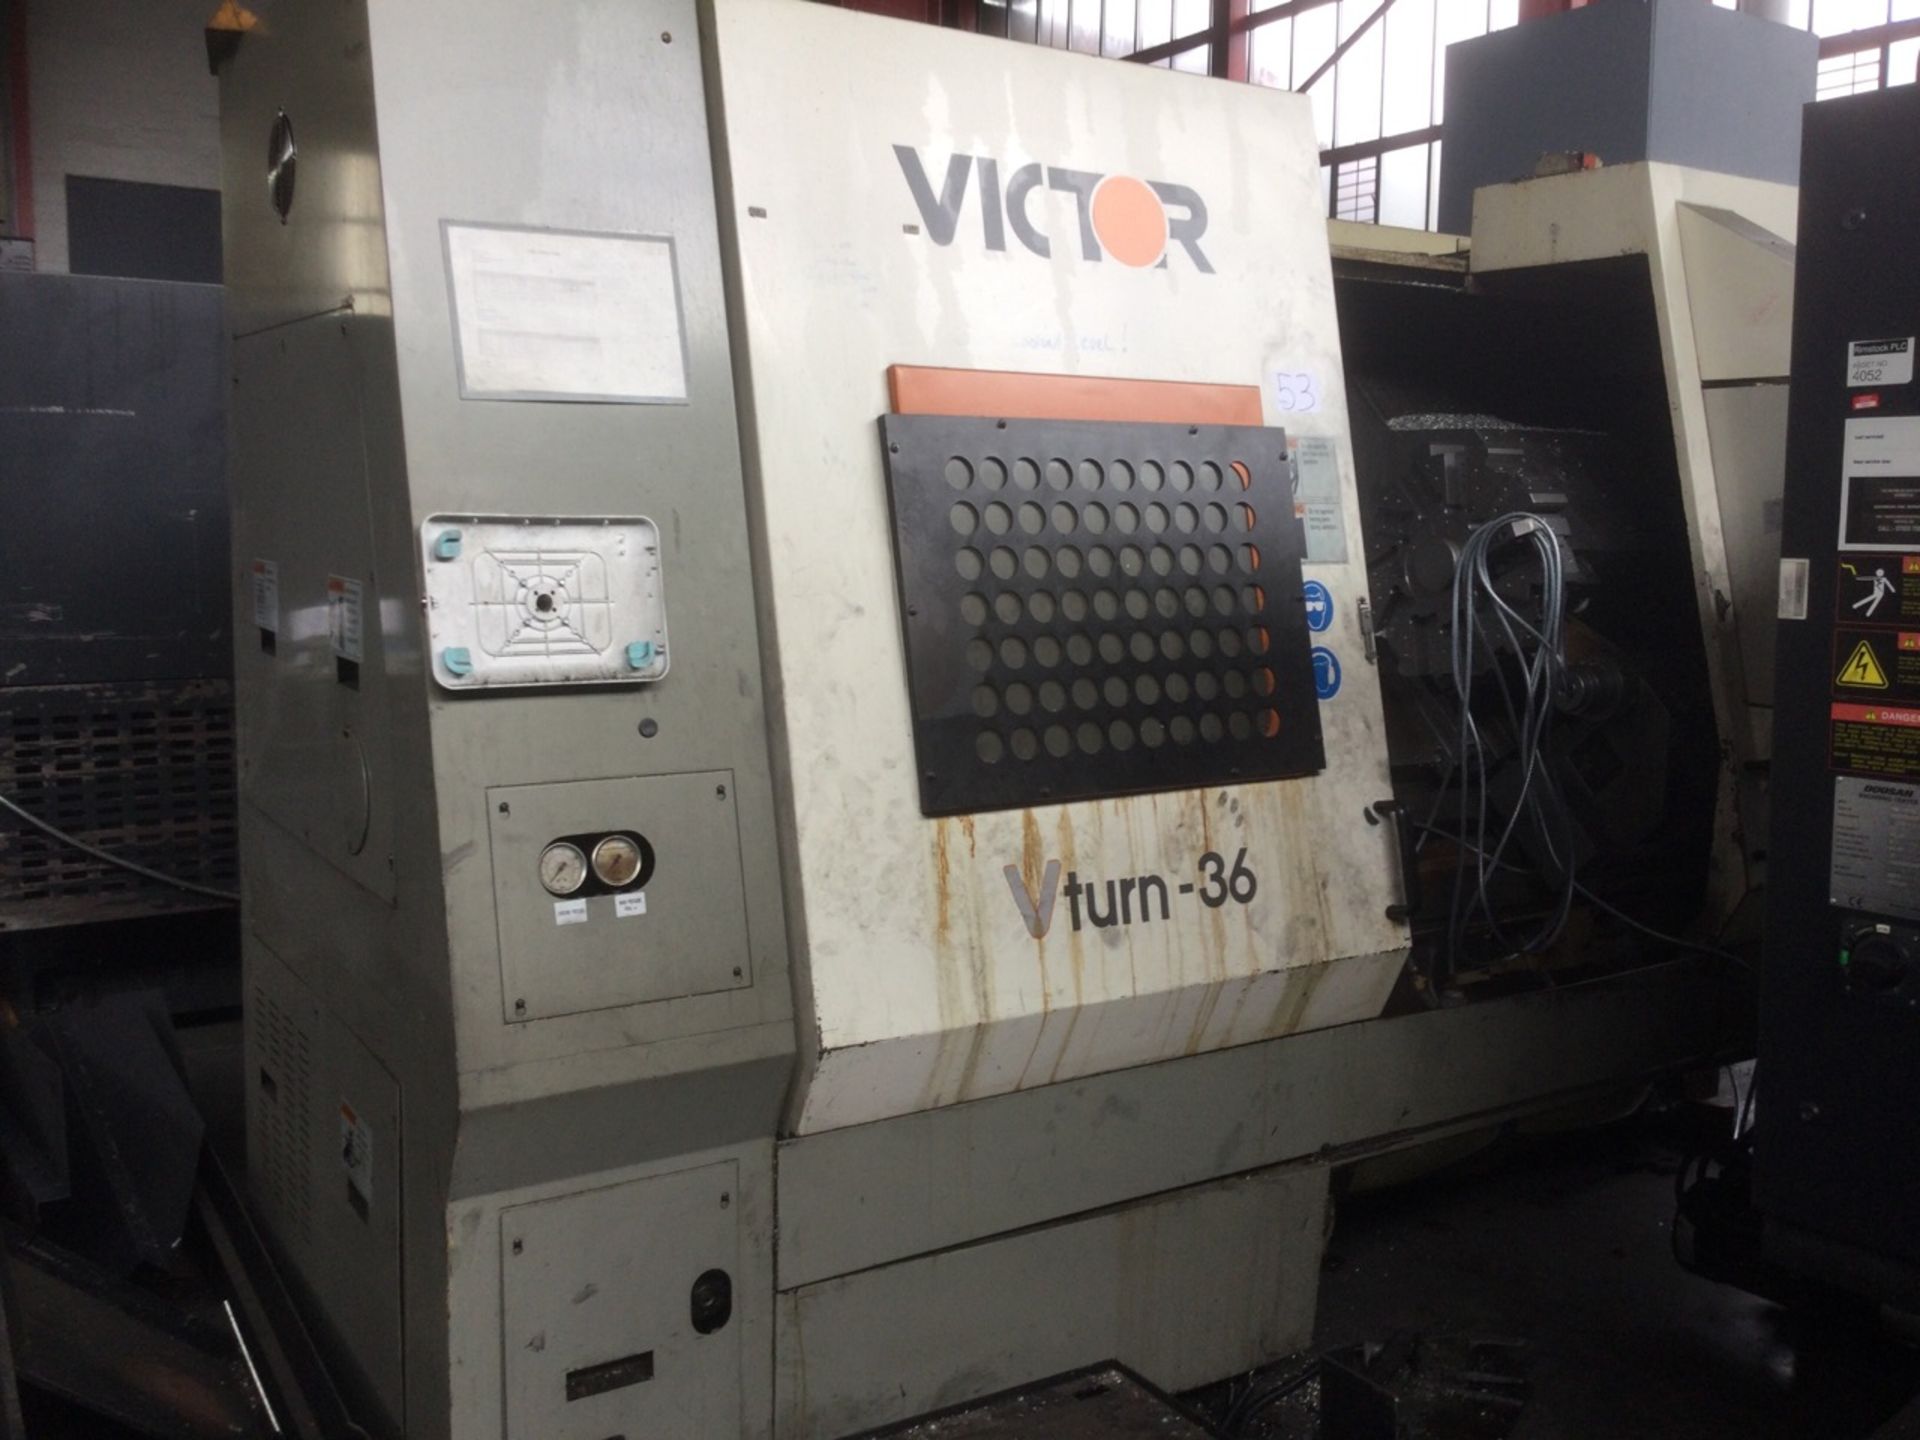 Victor VTURN 36 Horizontal CNC Lathe With Fanuc Series Ot Control